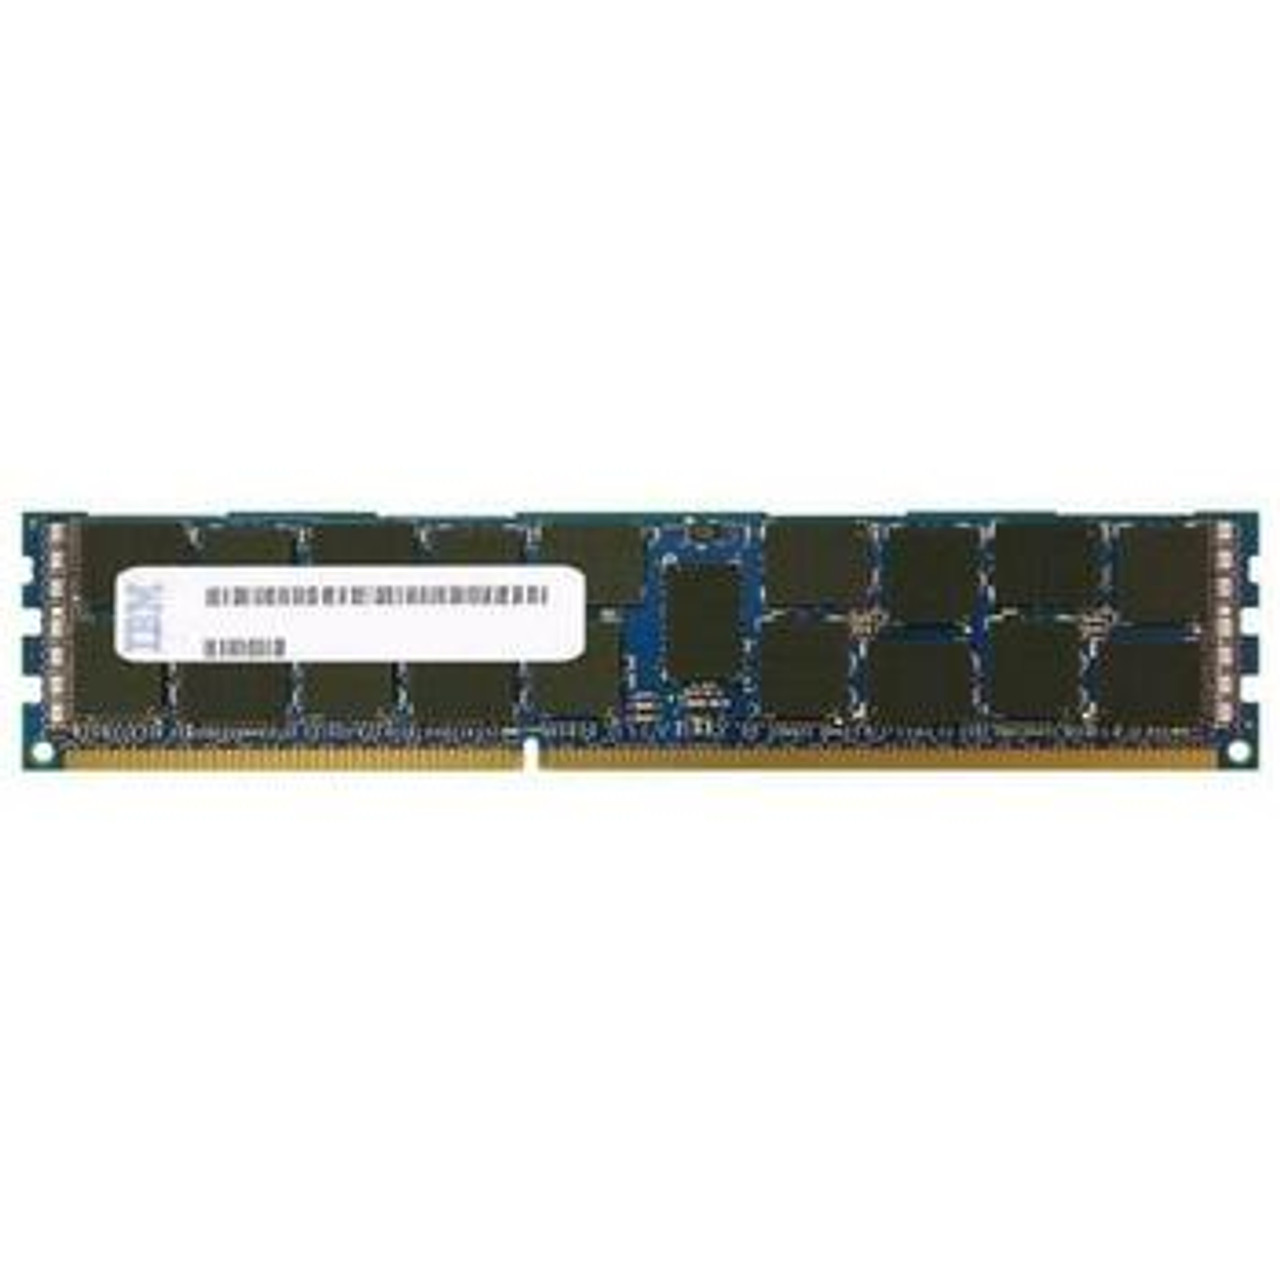 49Y1559 IBM 4GB DDR3 Registered ECC PC3-12800 1600Mhz 1Rx4 Memory